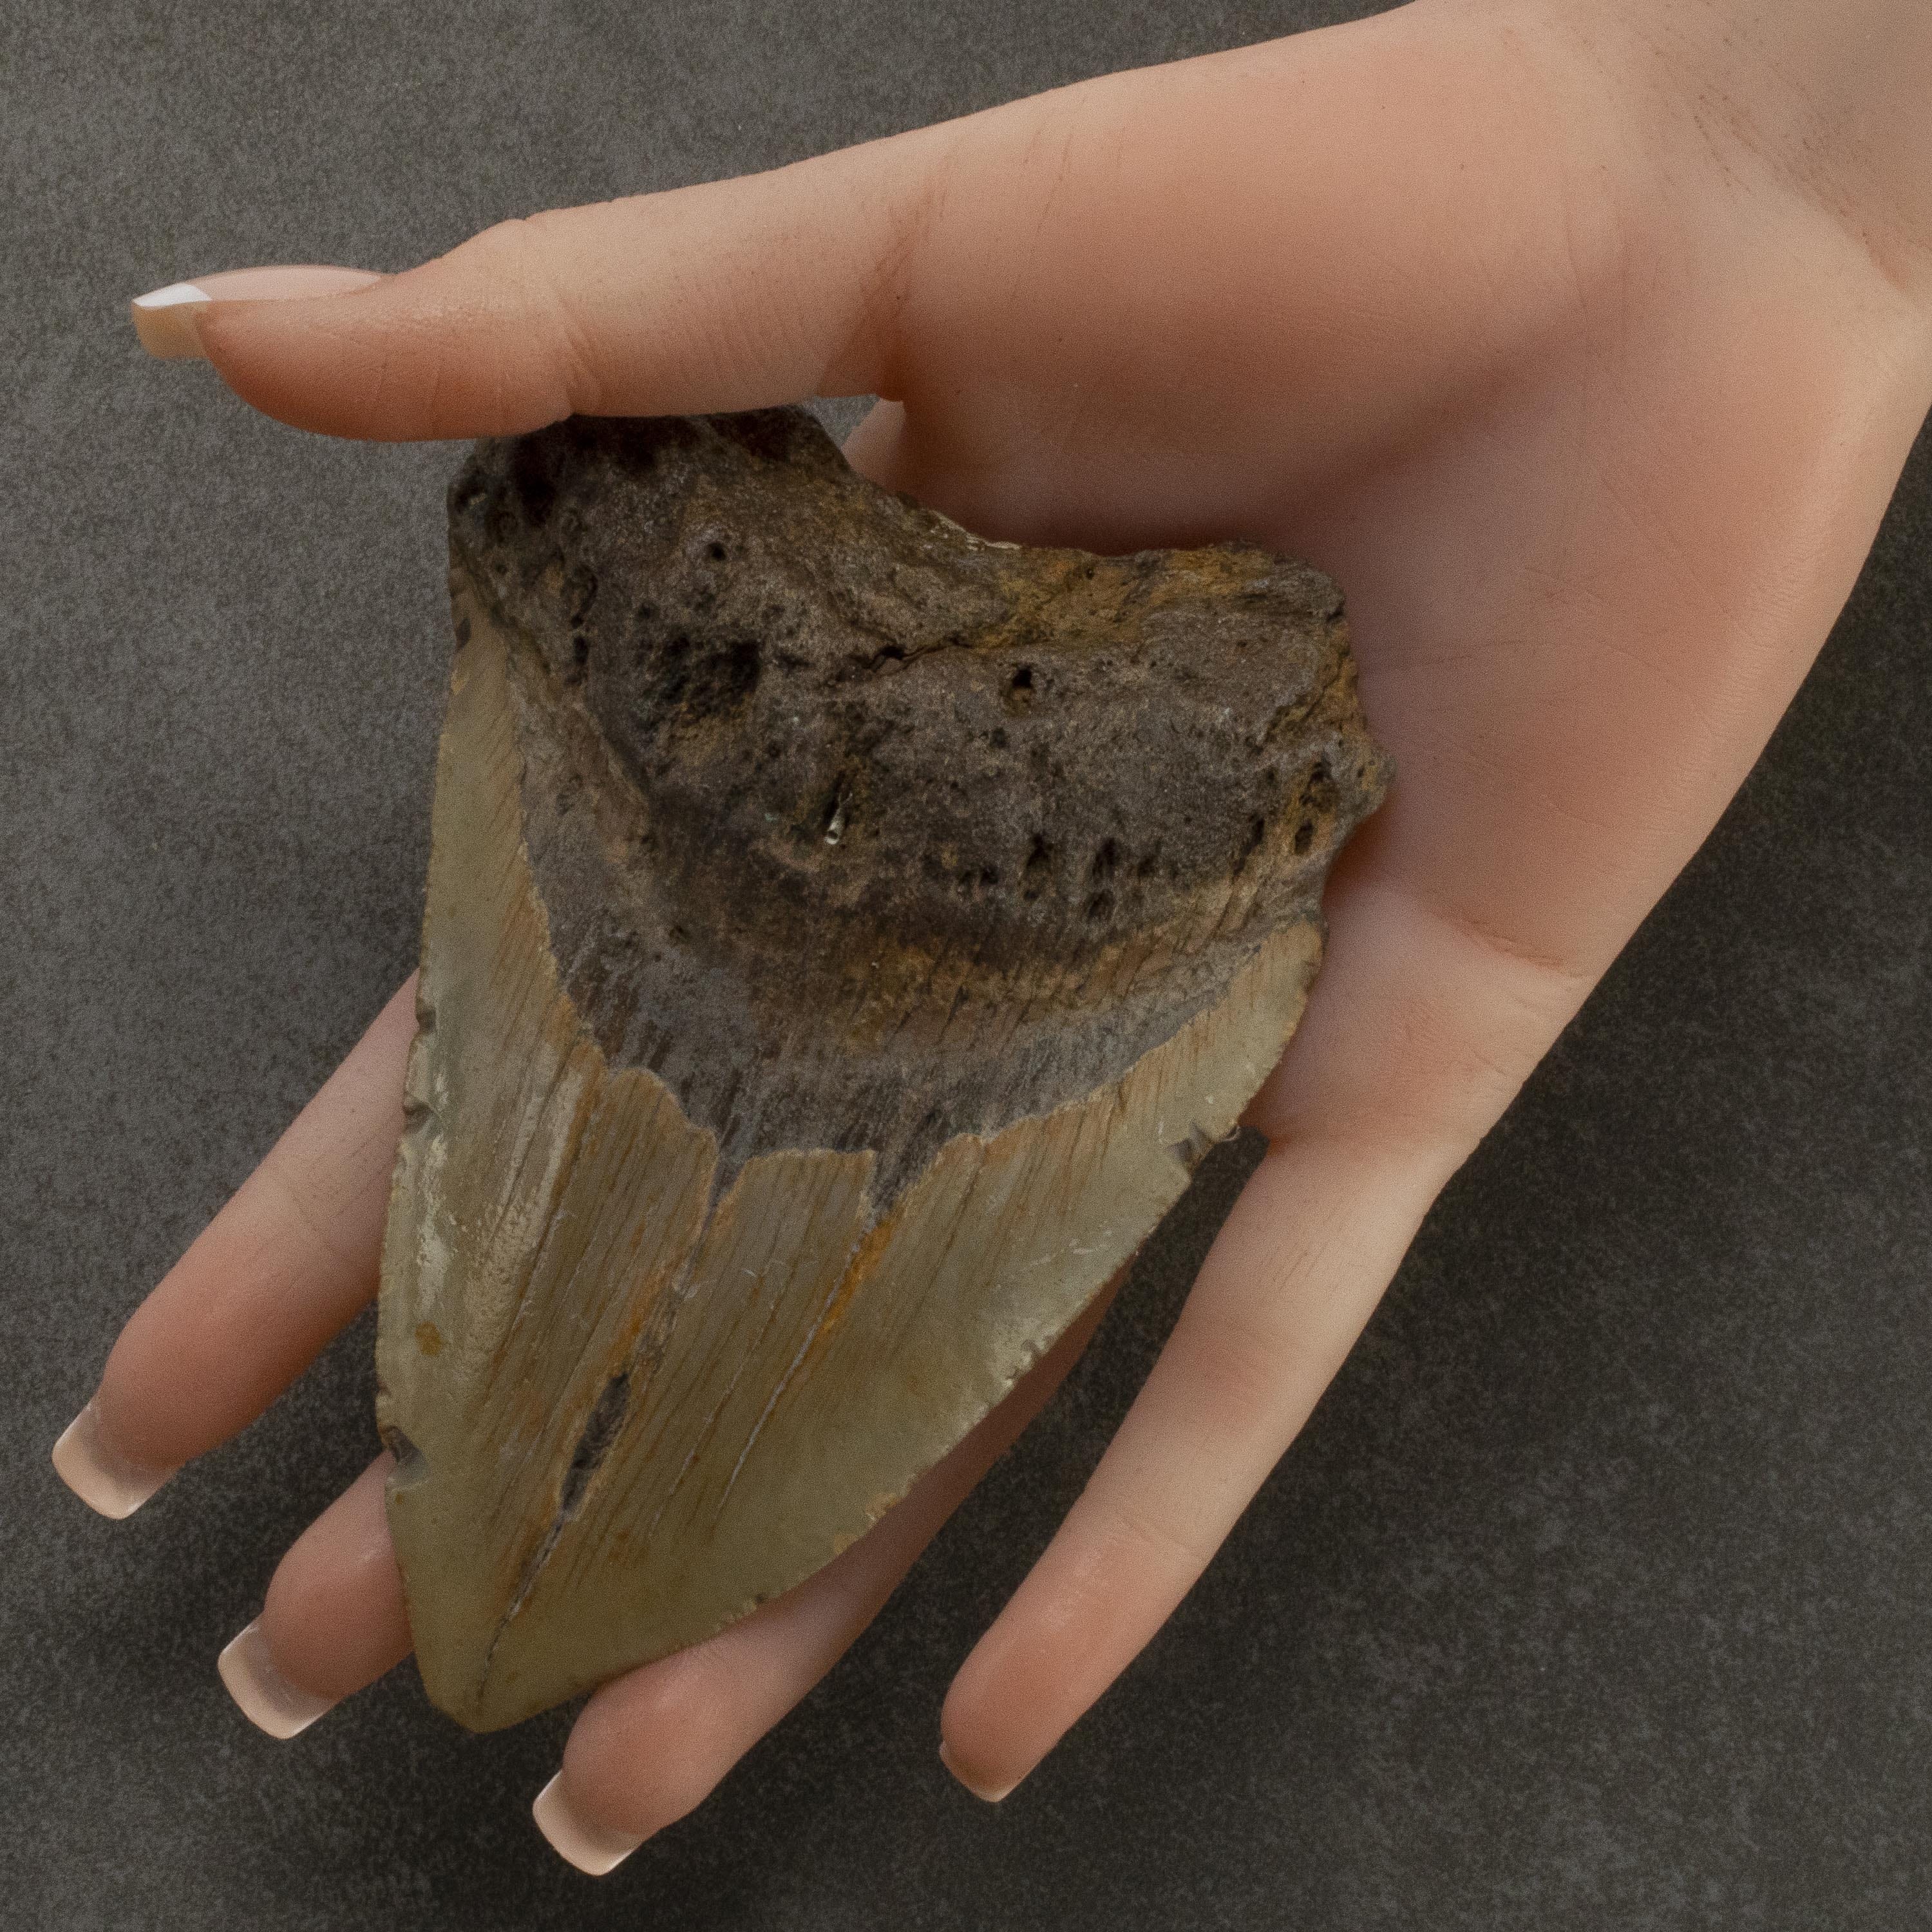 Kalifano Megalodon Teeth Megalodon Tooth from South Carolina - 4.3" ST2000.078